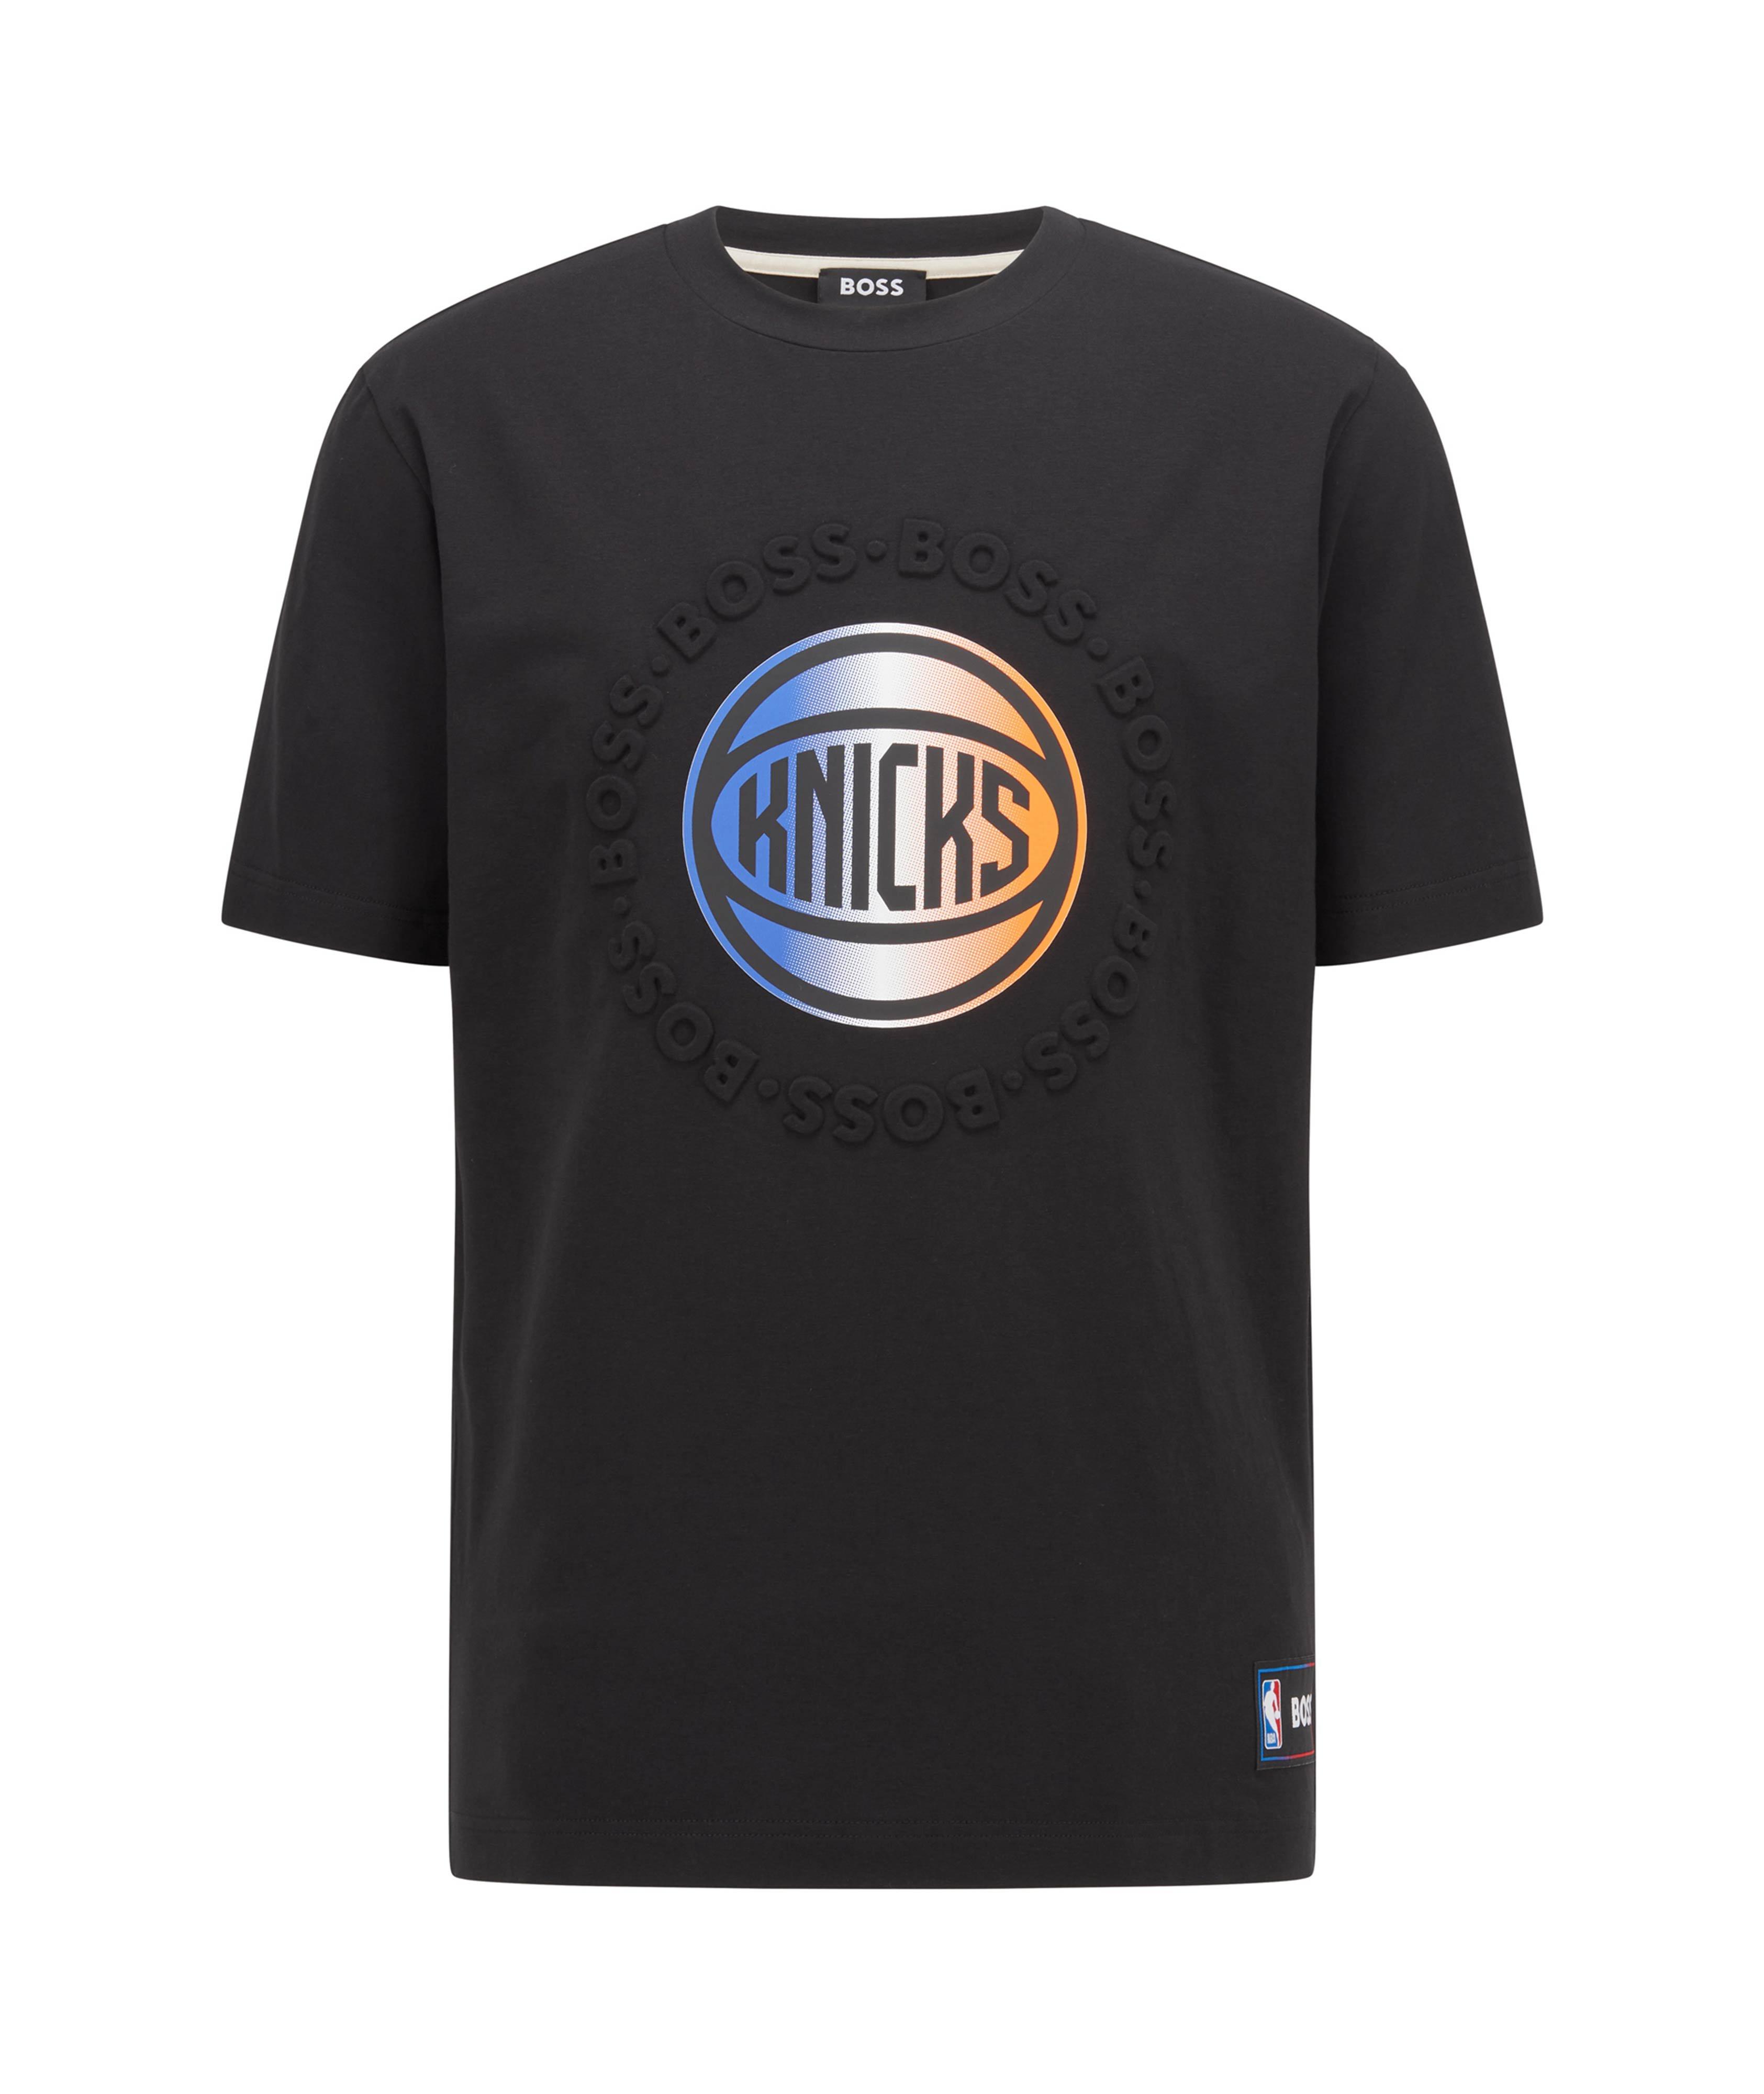 T-shirt, collection NBA image 0